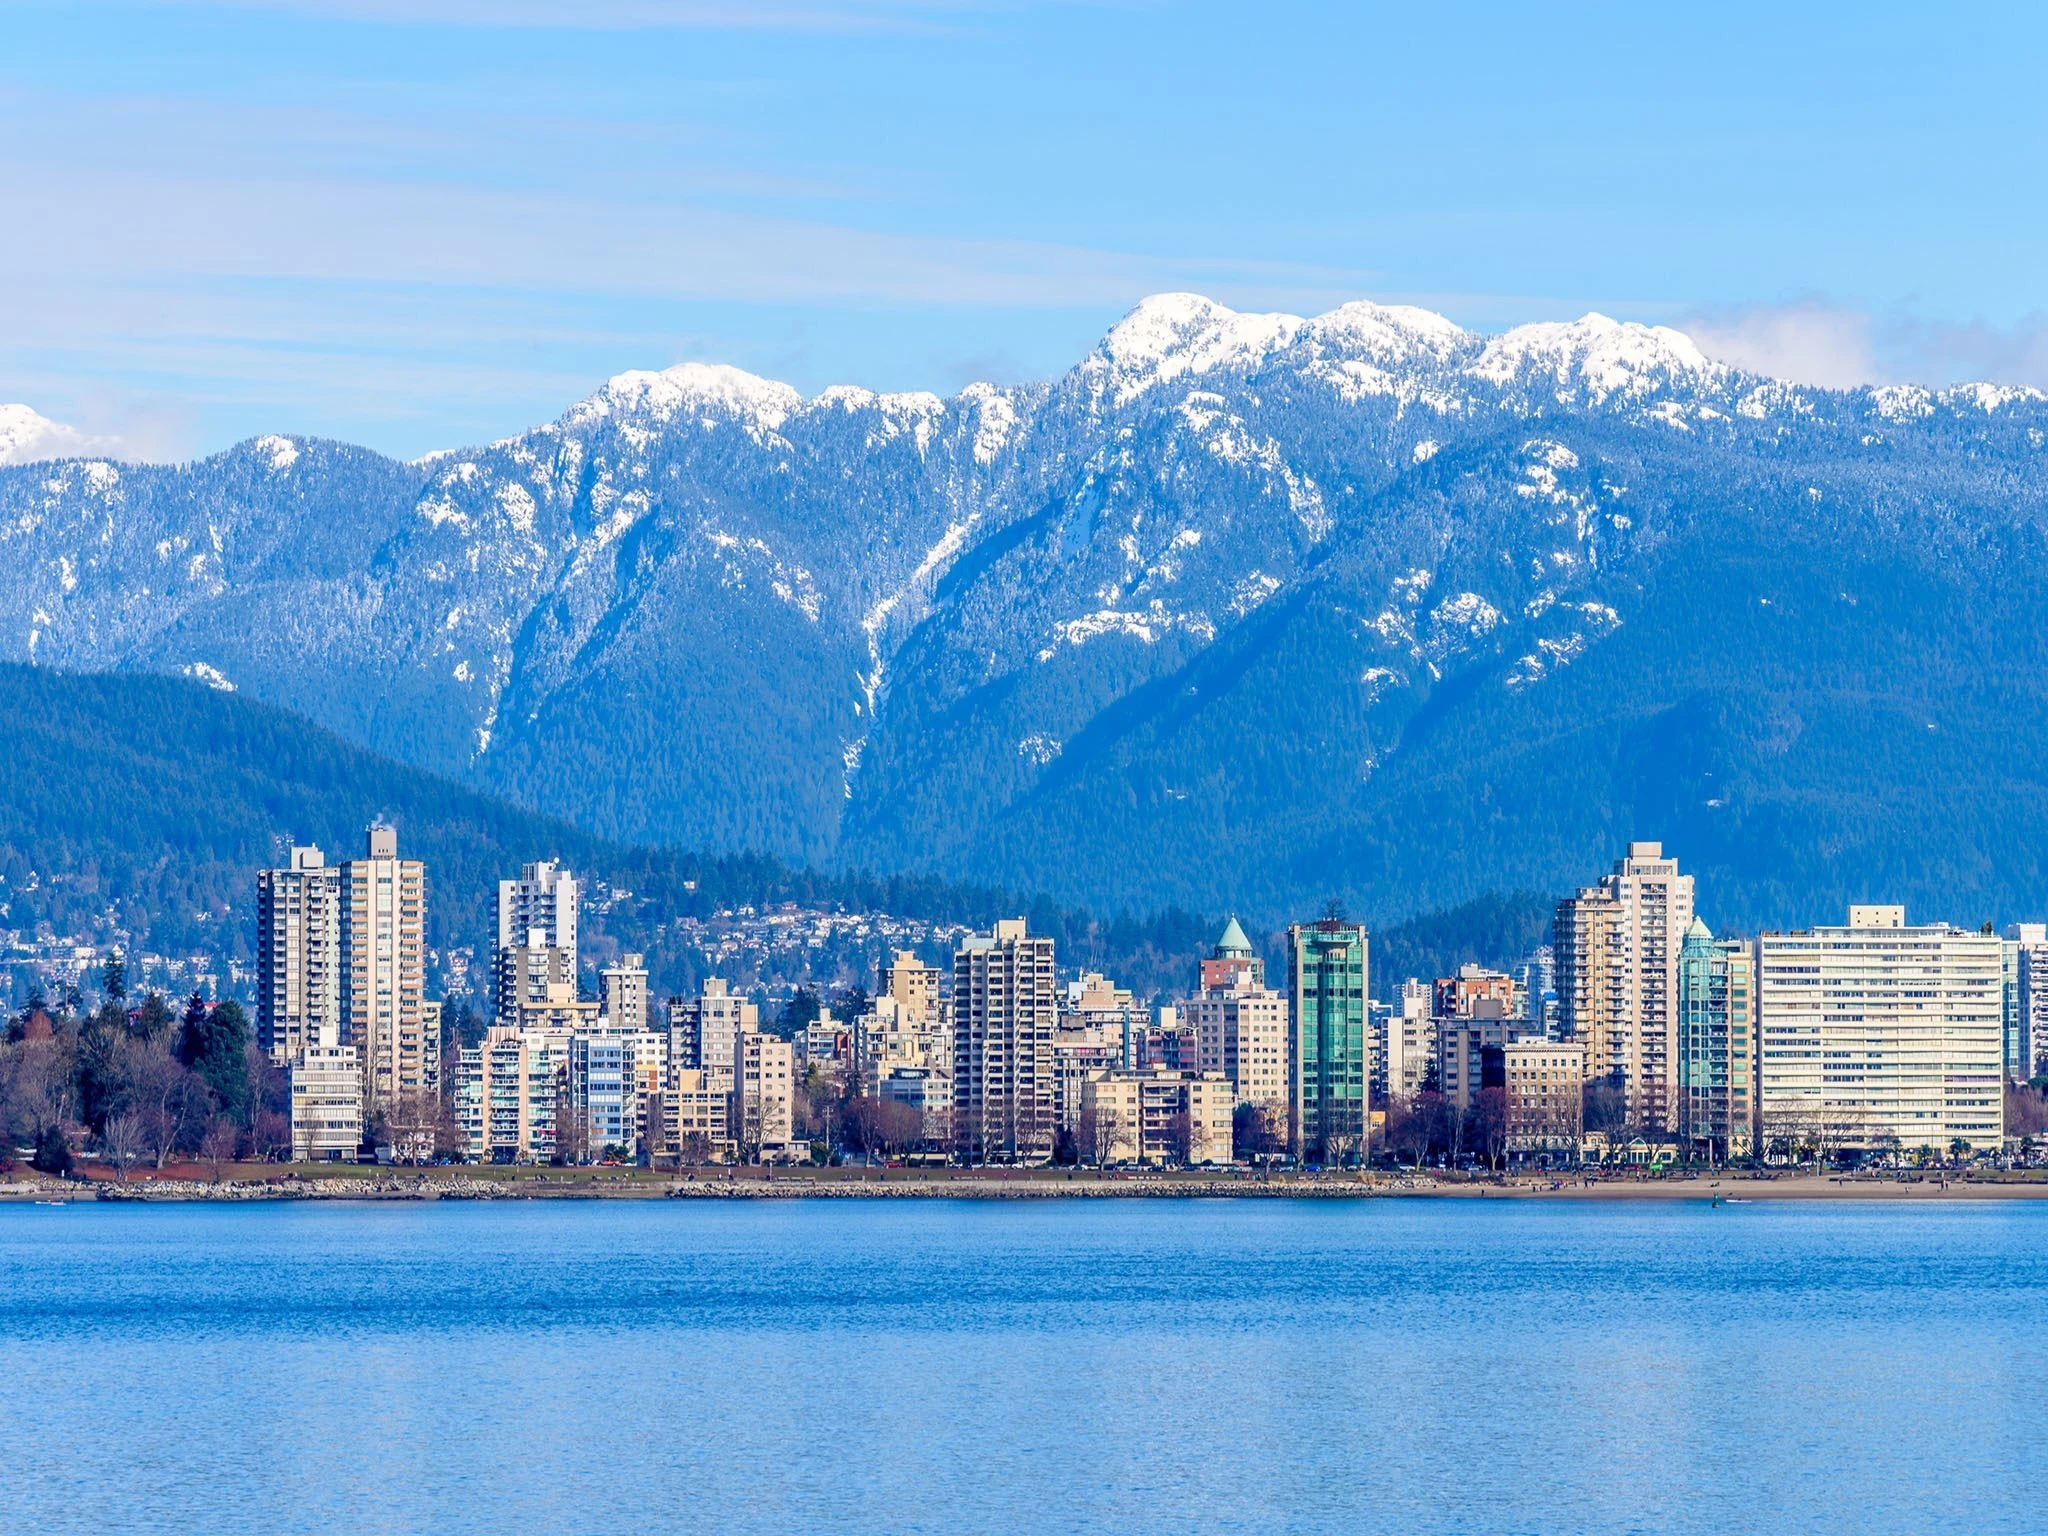 Британская колумбия это. Ванкувер Канада. Ванкувер, Британская Колумбия, Канада. Ванкувер (город в Канаде) города Канады. Западный Ванкувер Канада.